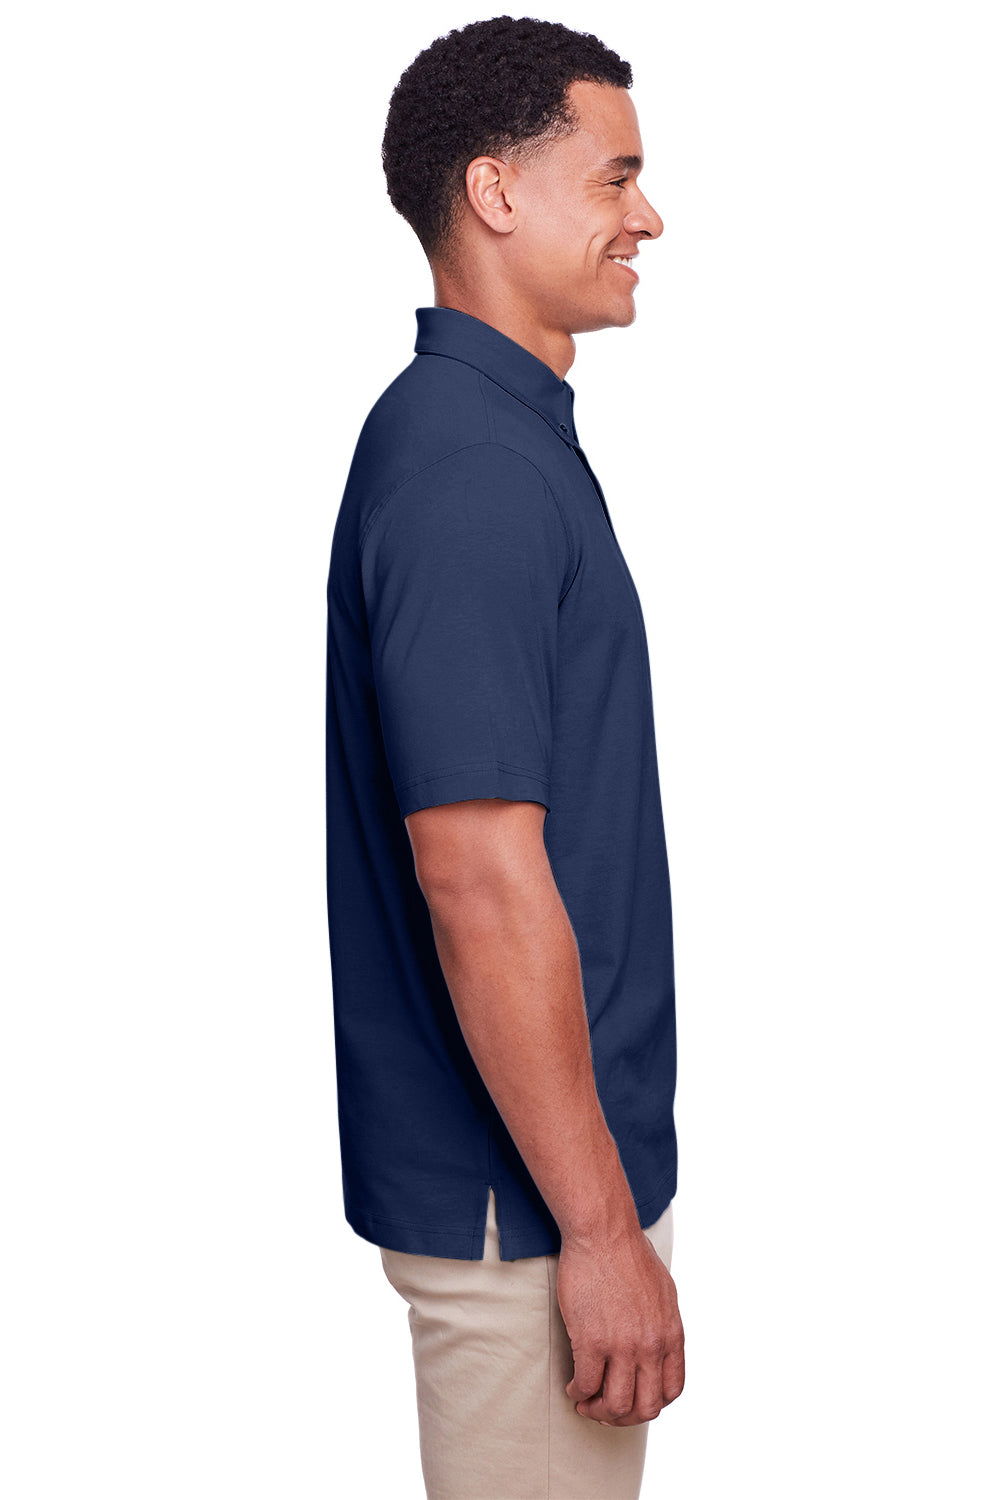 UltraClub UC105 Mens Lakeshore Performance Moisture Wicking Short Sleeve Polo Shirt Navy Blue Side